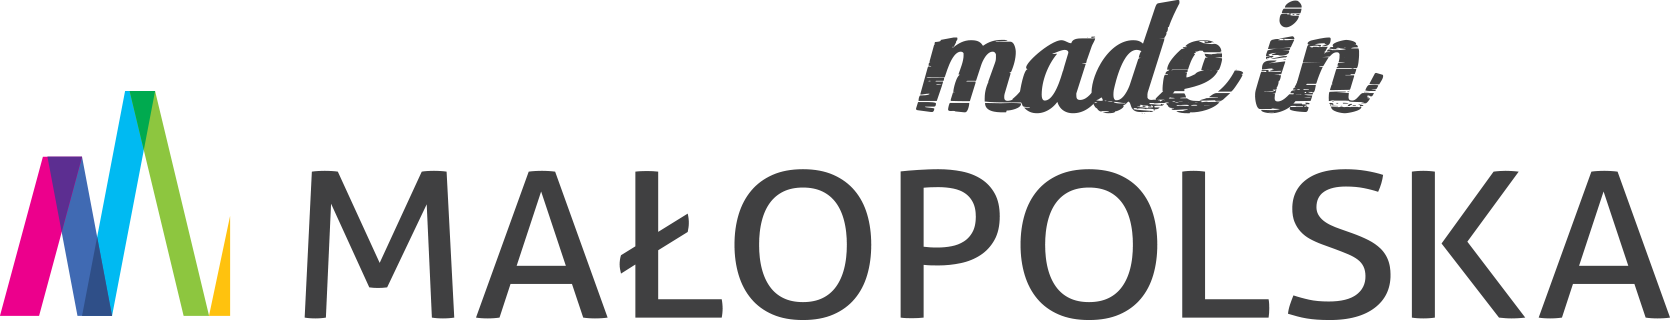 Logo Made in Małopolska